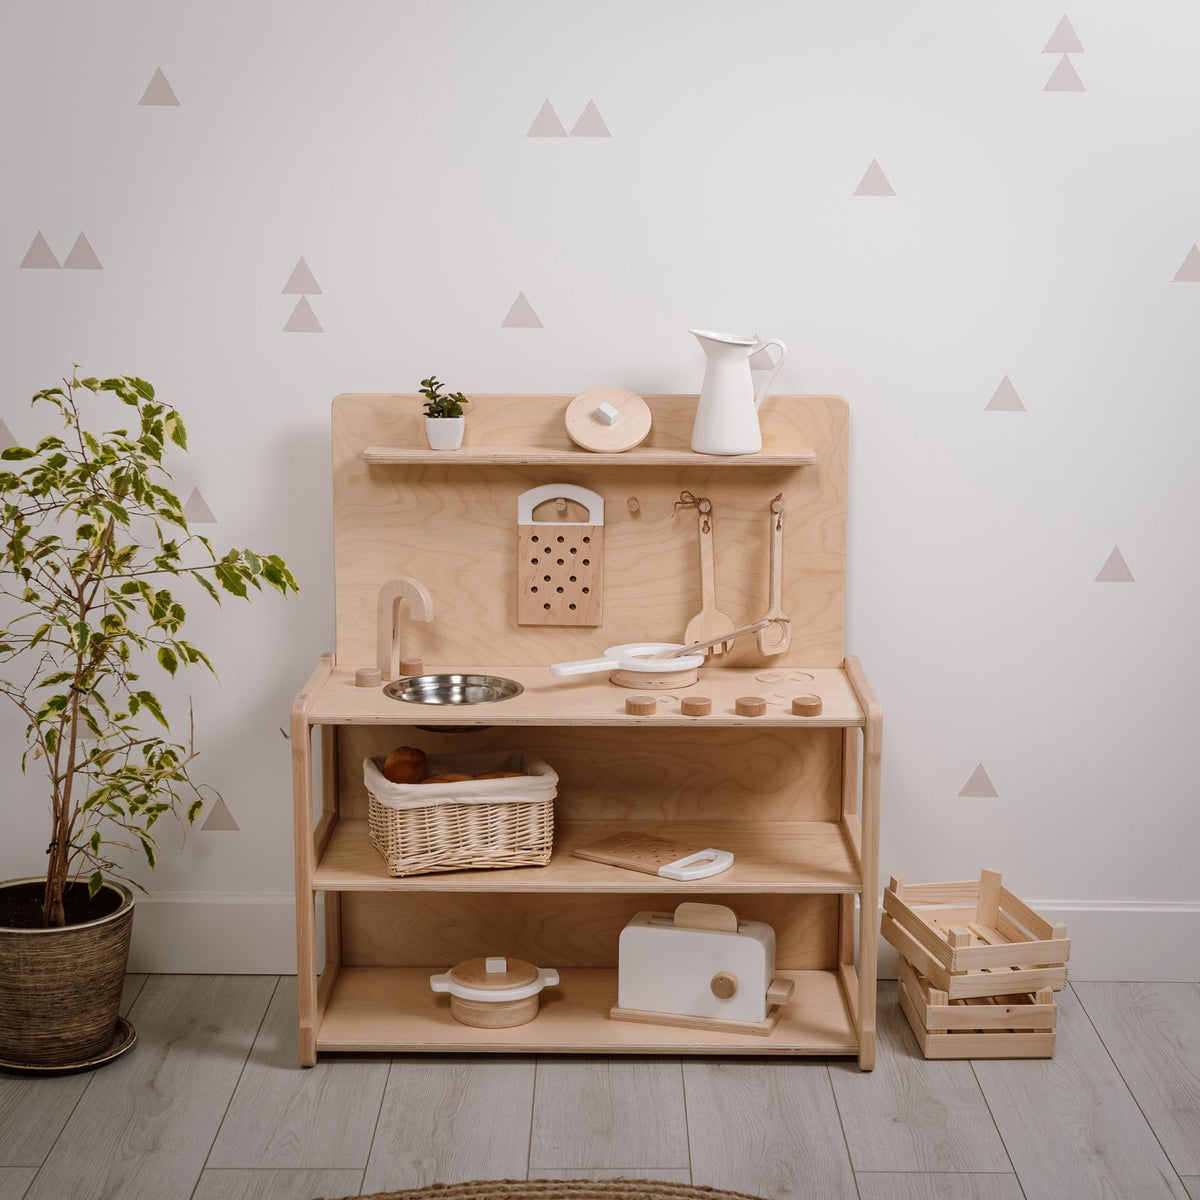 Toy kitchen - Montessori®